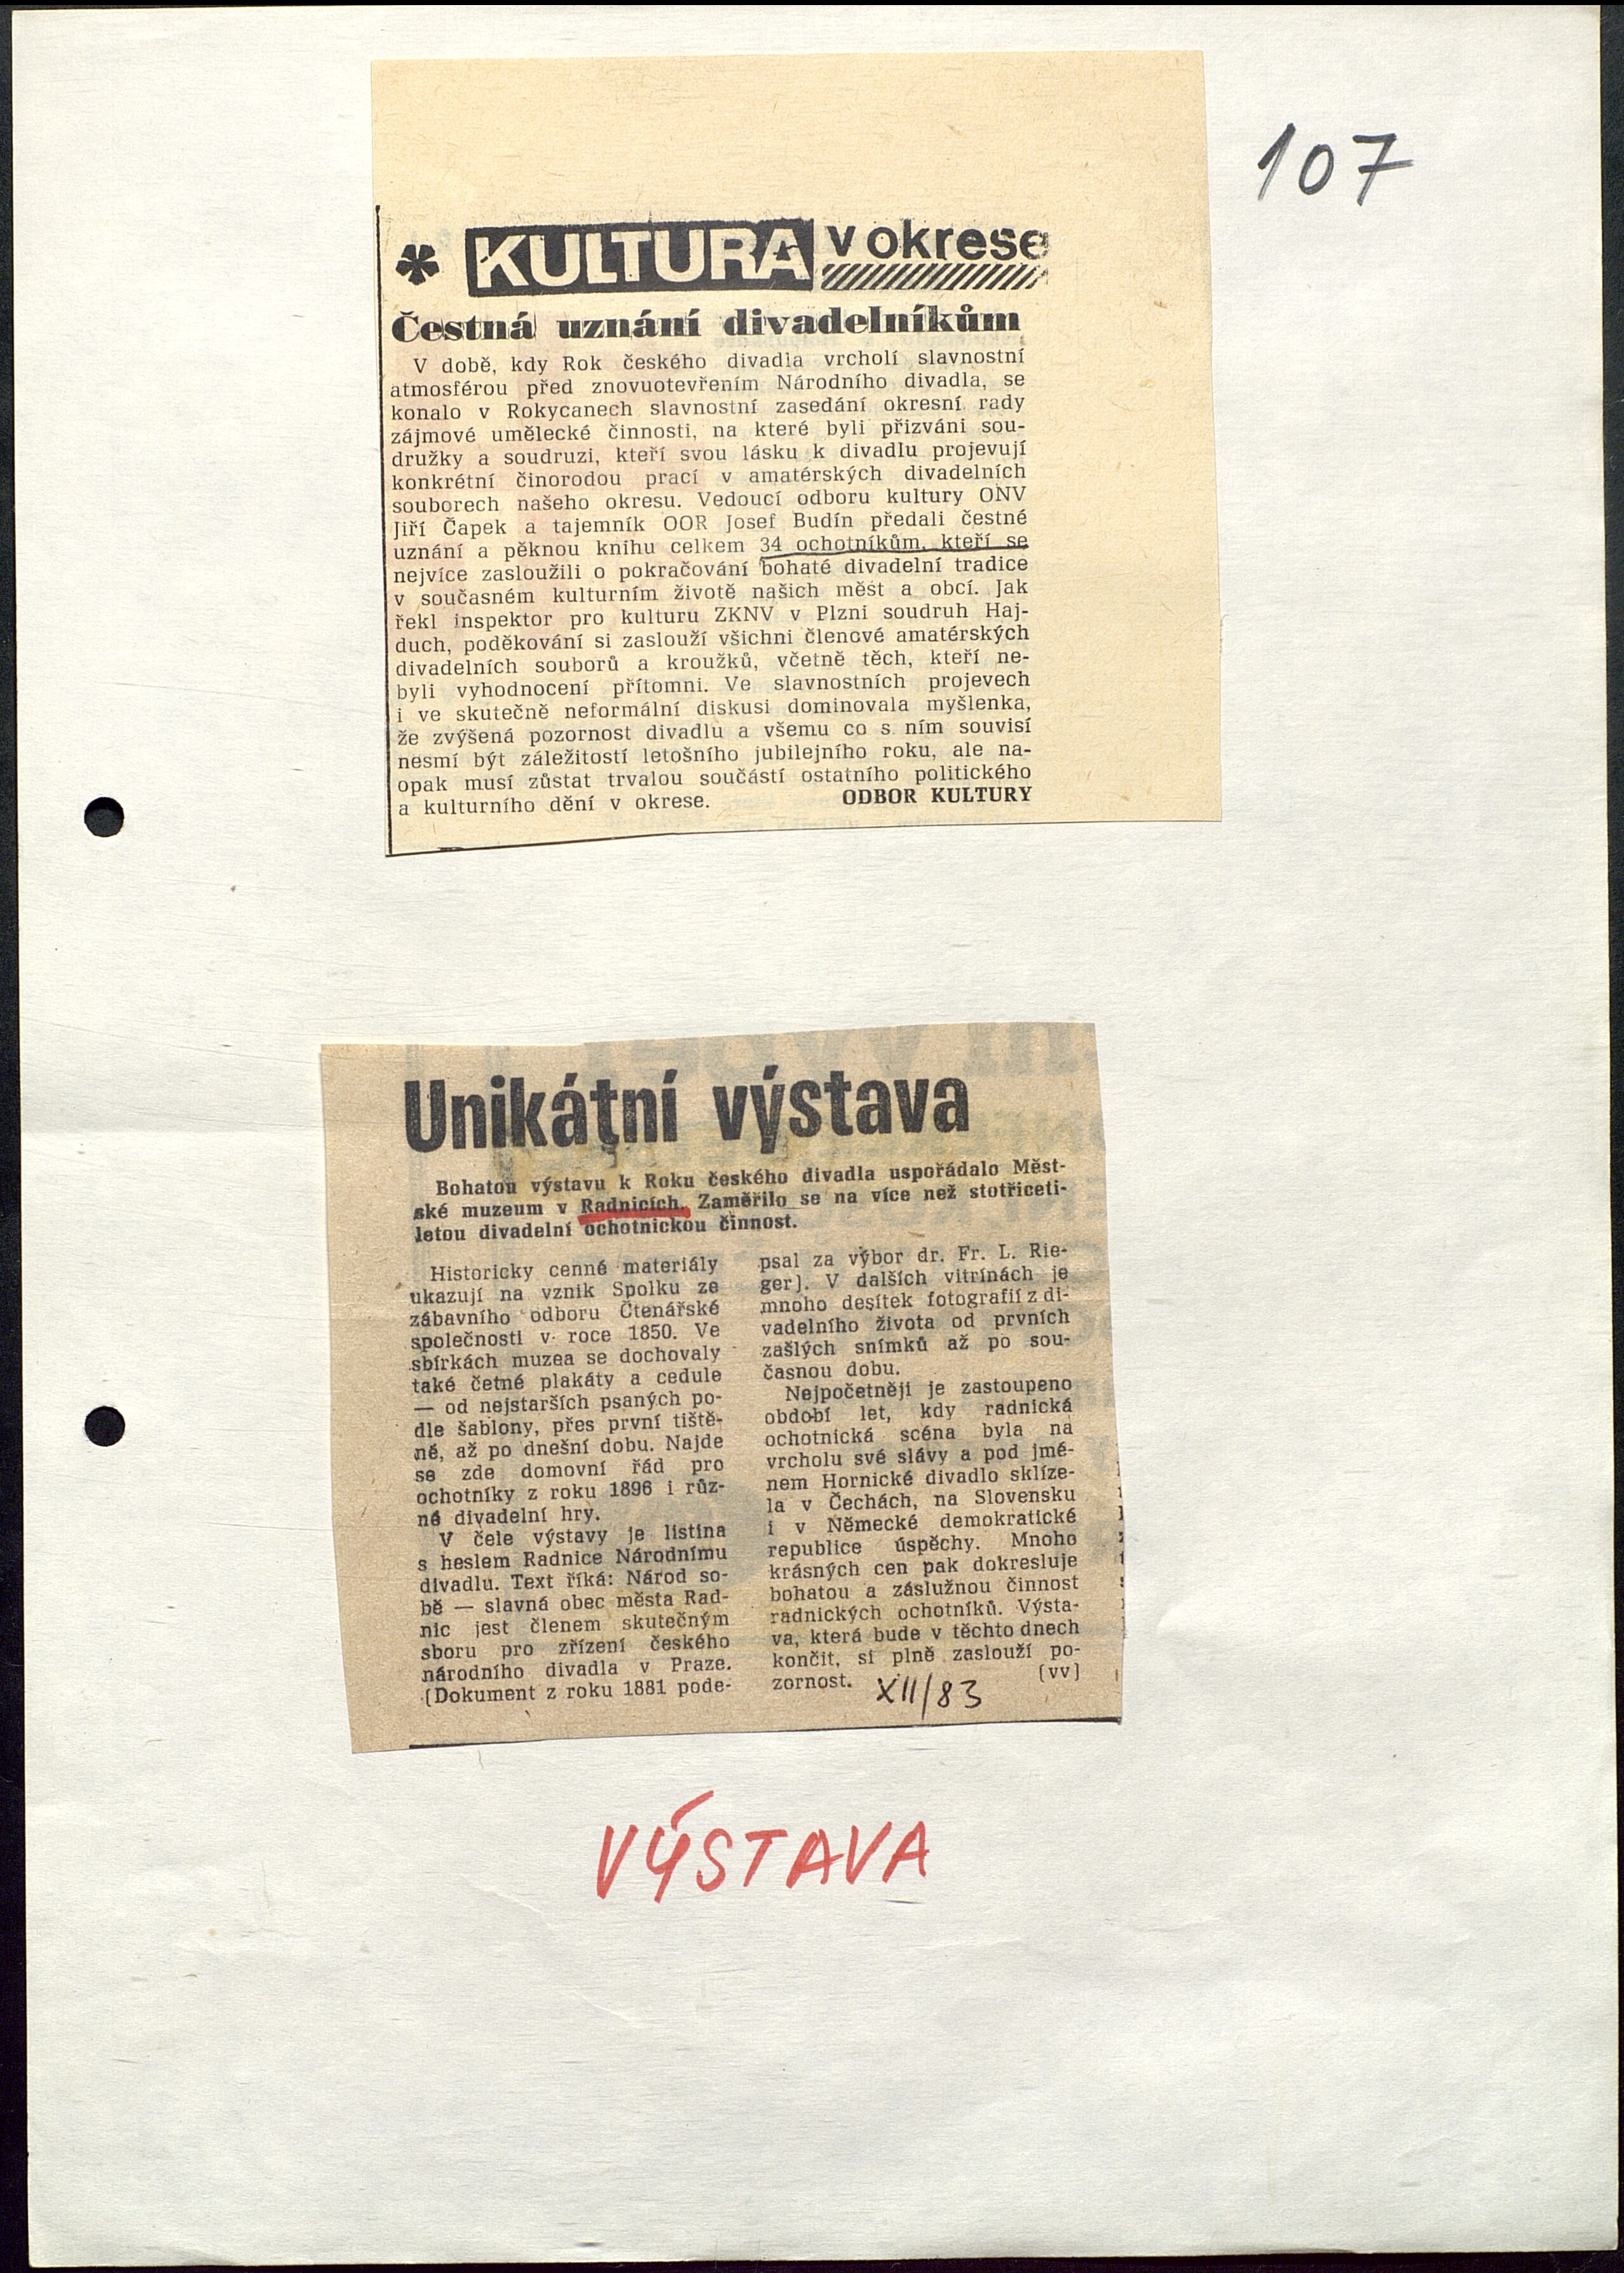 393. soap-ro_00152_mesto-radnice-priloha-1983-1985_3930